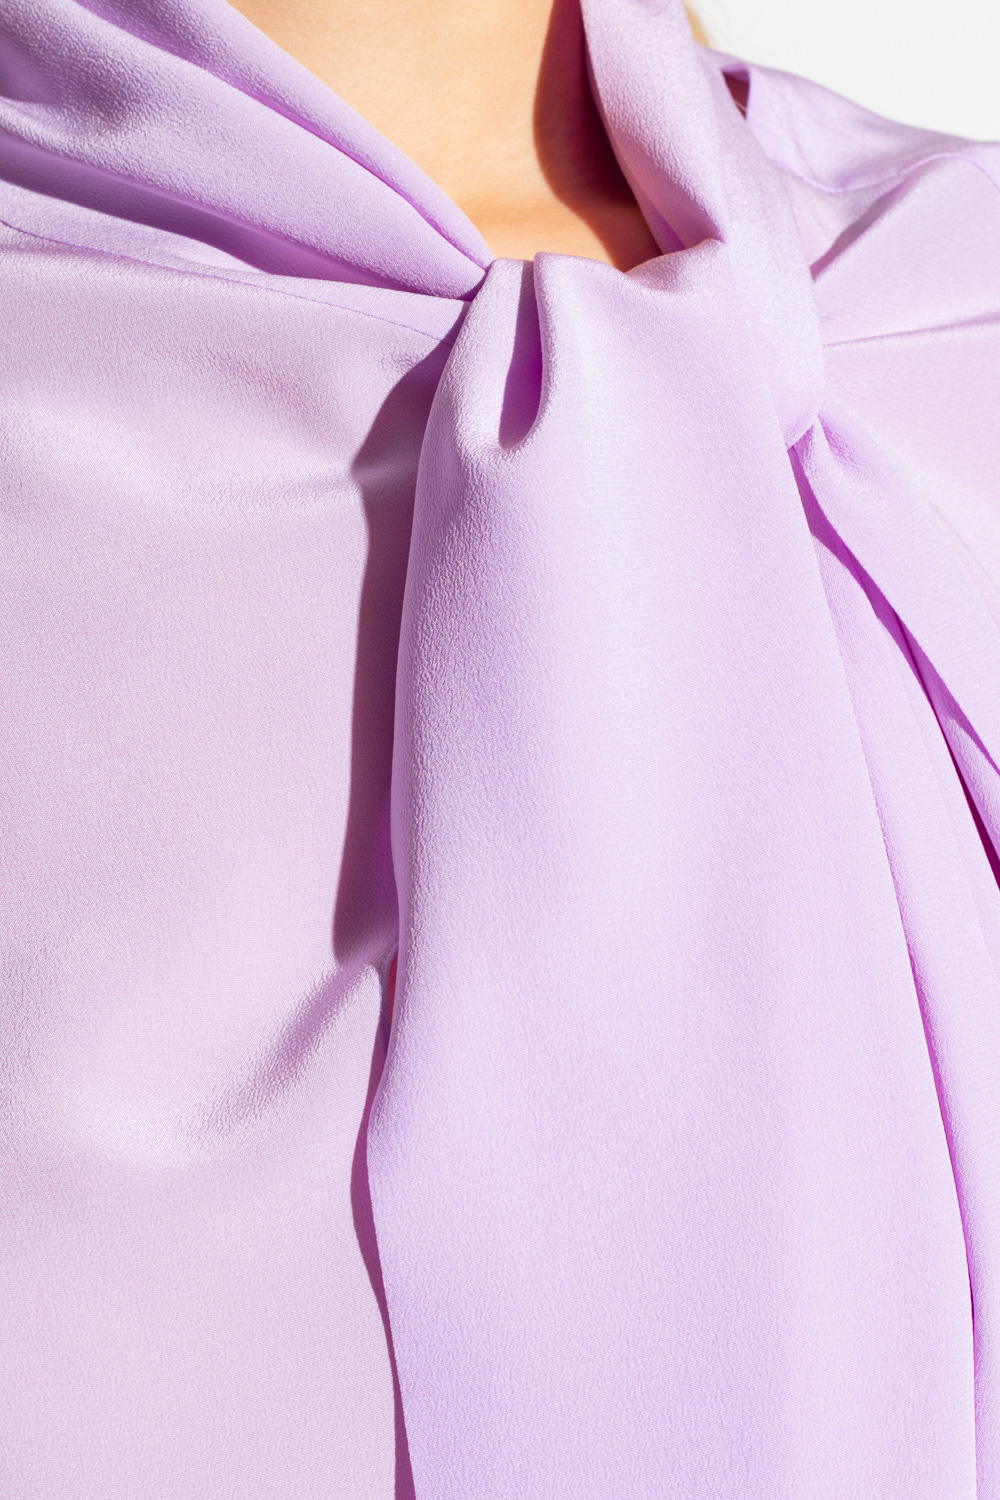 Givenchy Silk top